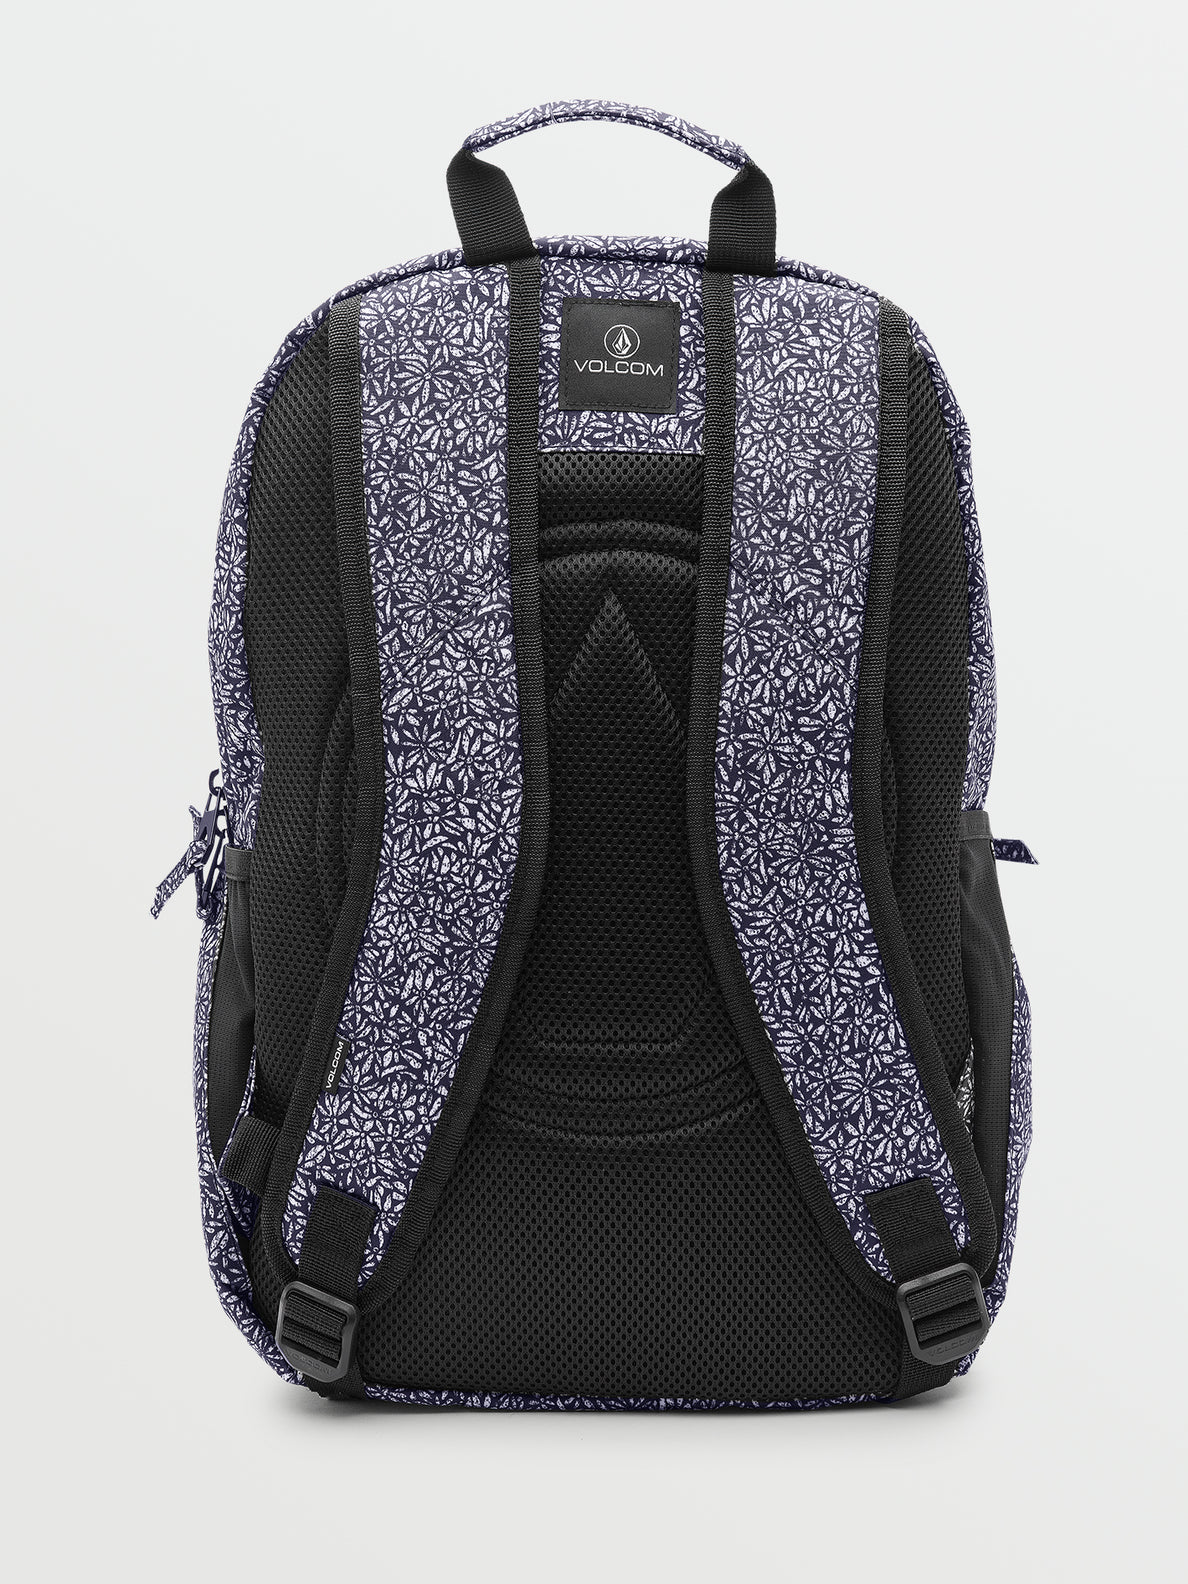 Upperclass Backpack - Black White (VMXX017WEA_00BWH) [B]